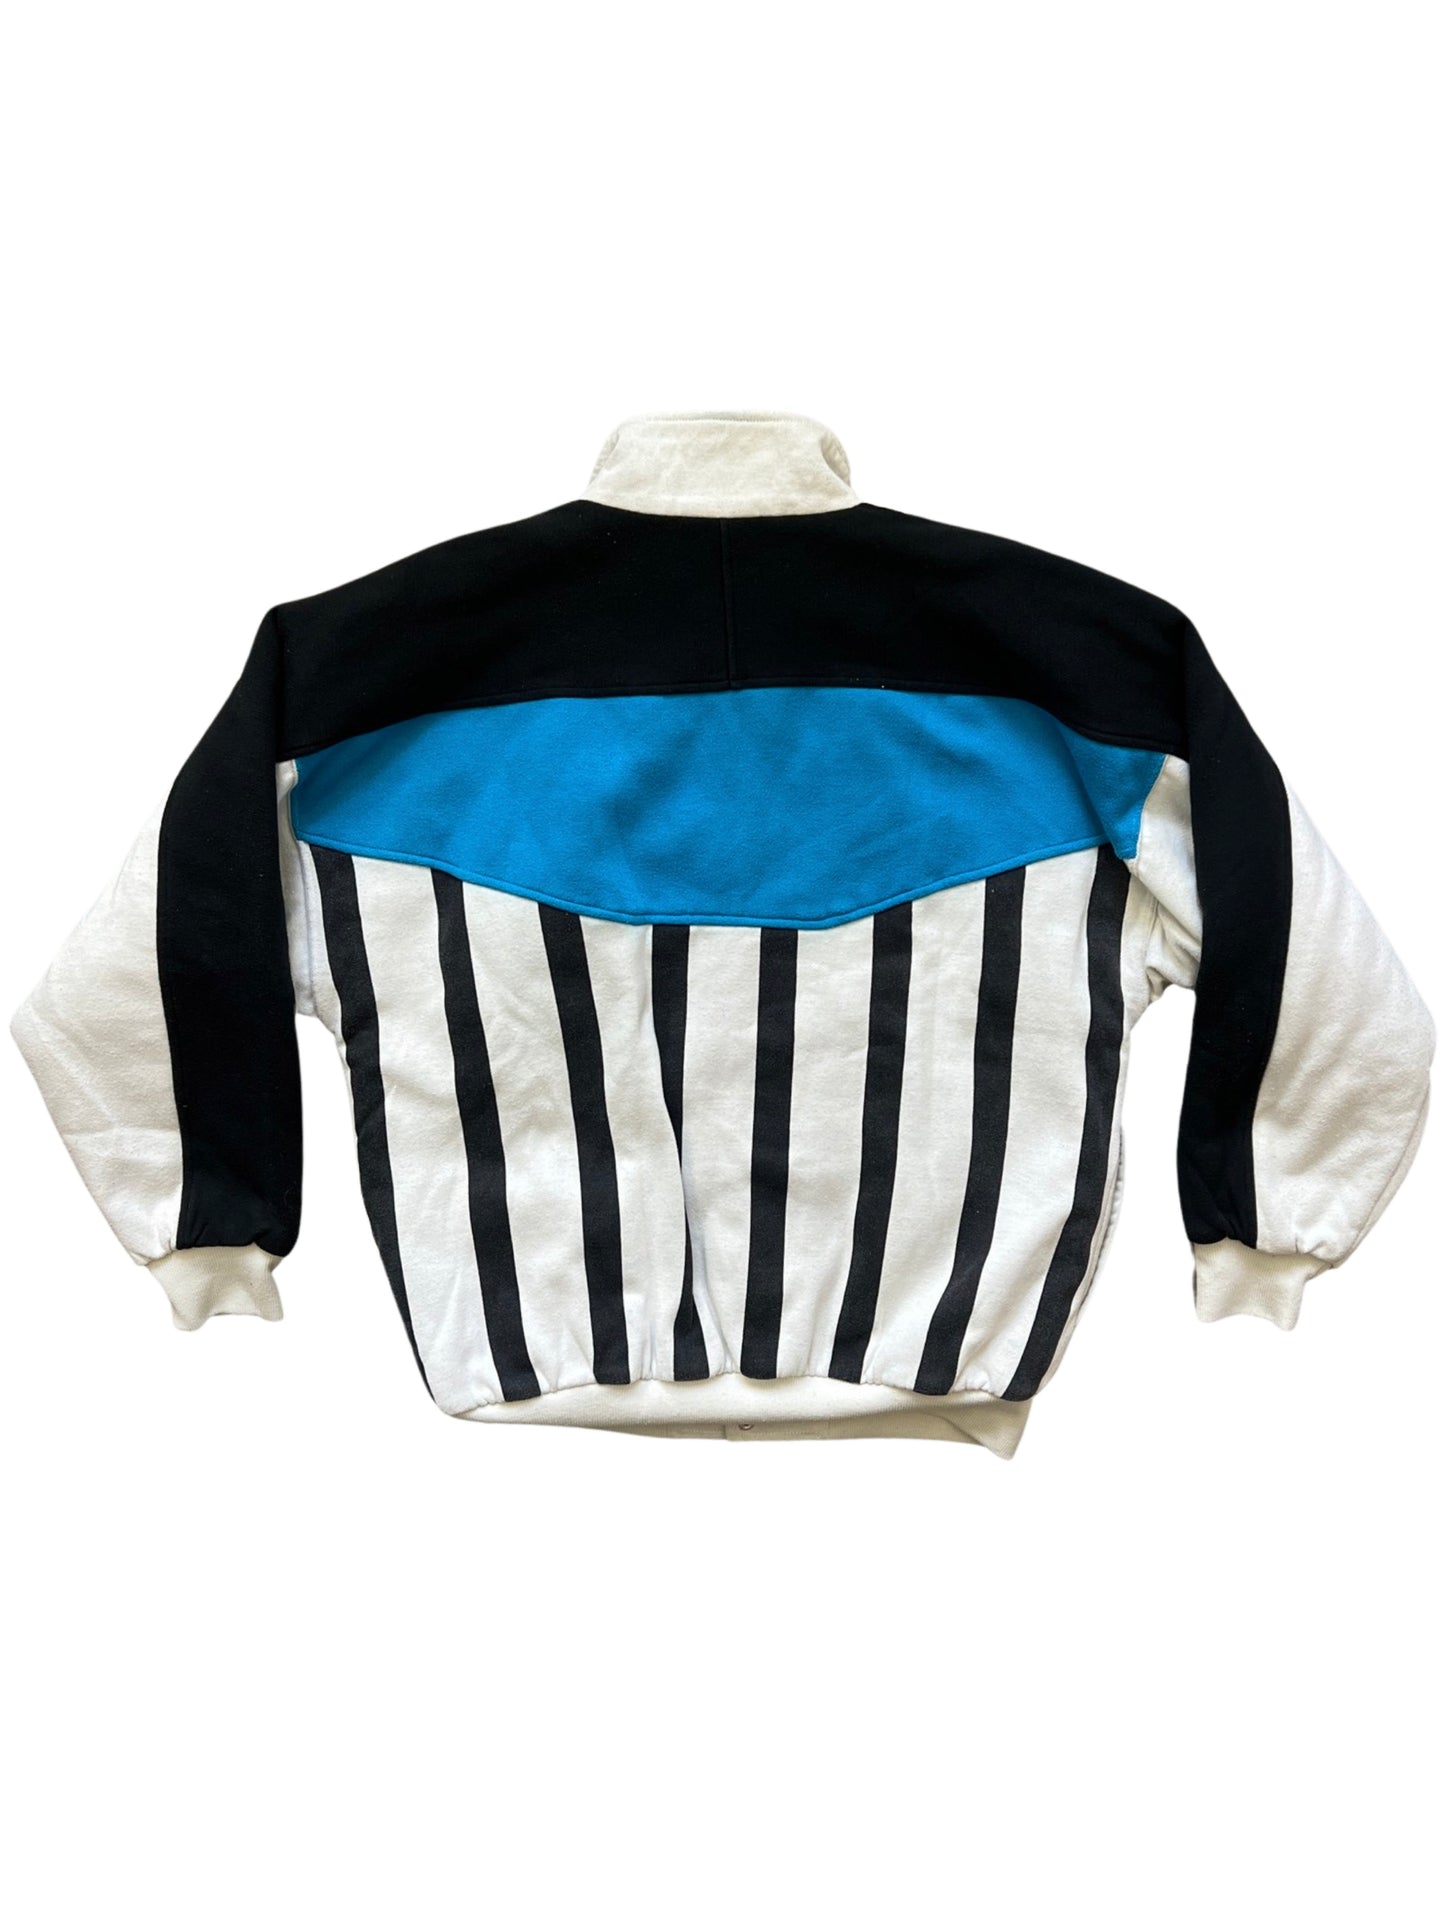 Vintage Adidas Button-Up Bomber Jacket (circa 1980s)